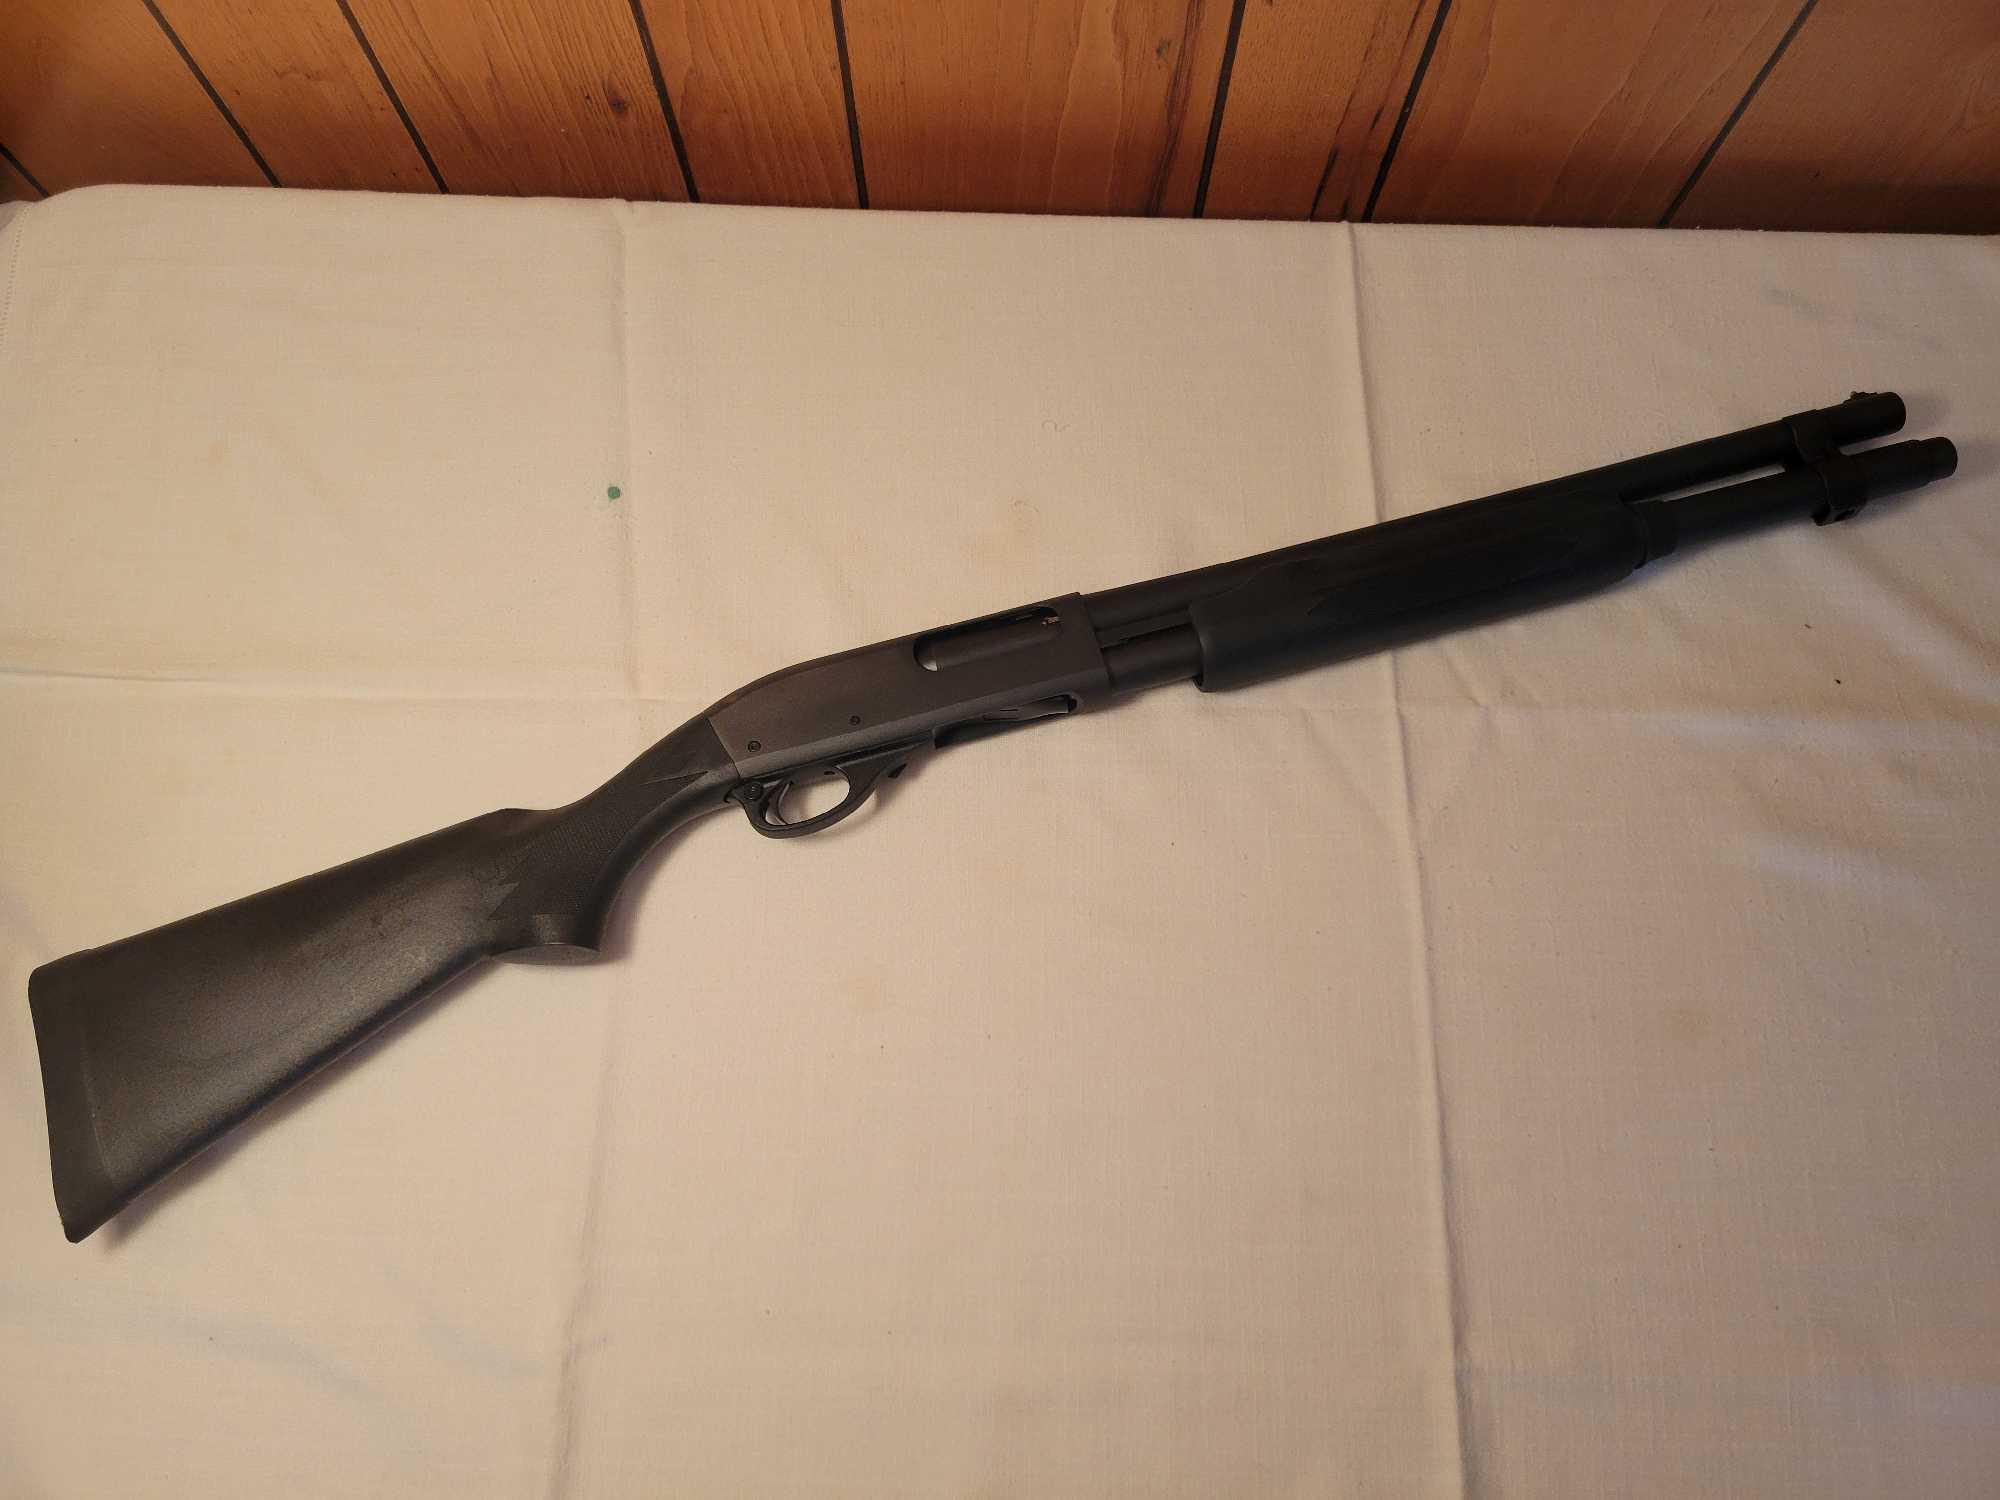 Remington 870 express magnum 12 ga. 2... or 3in pump action shotgun with hardcase